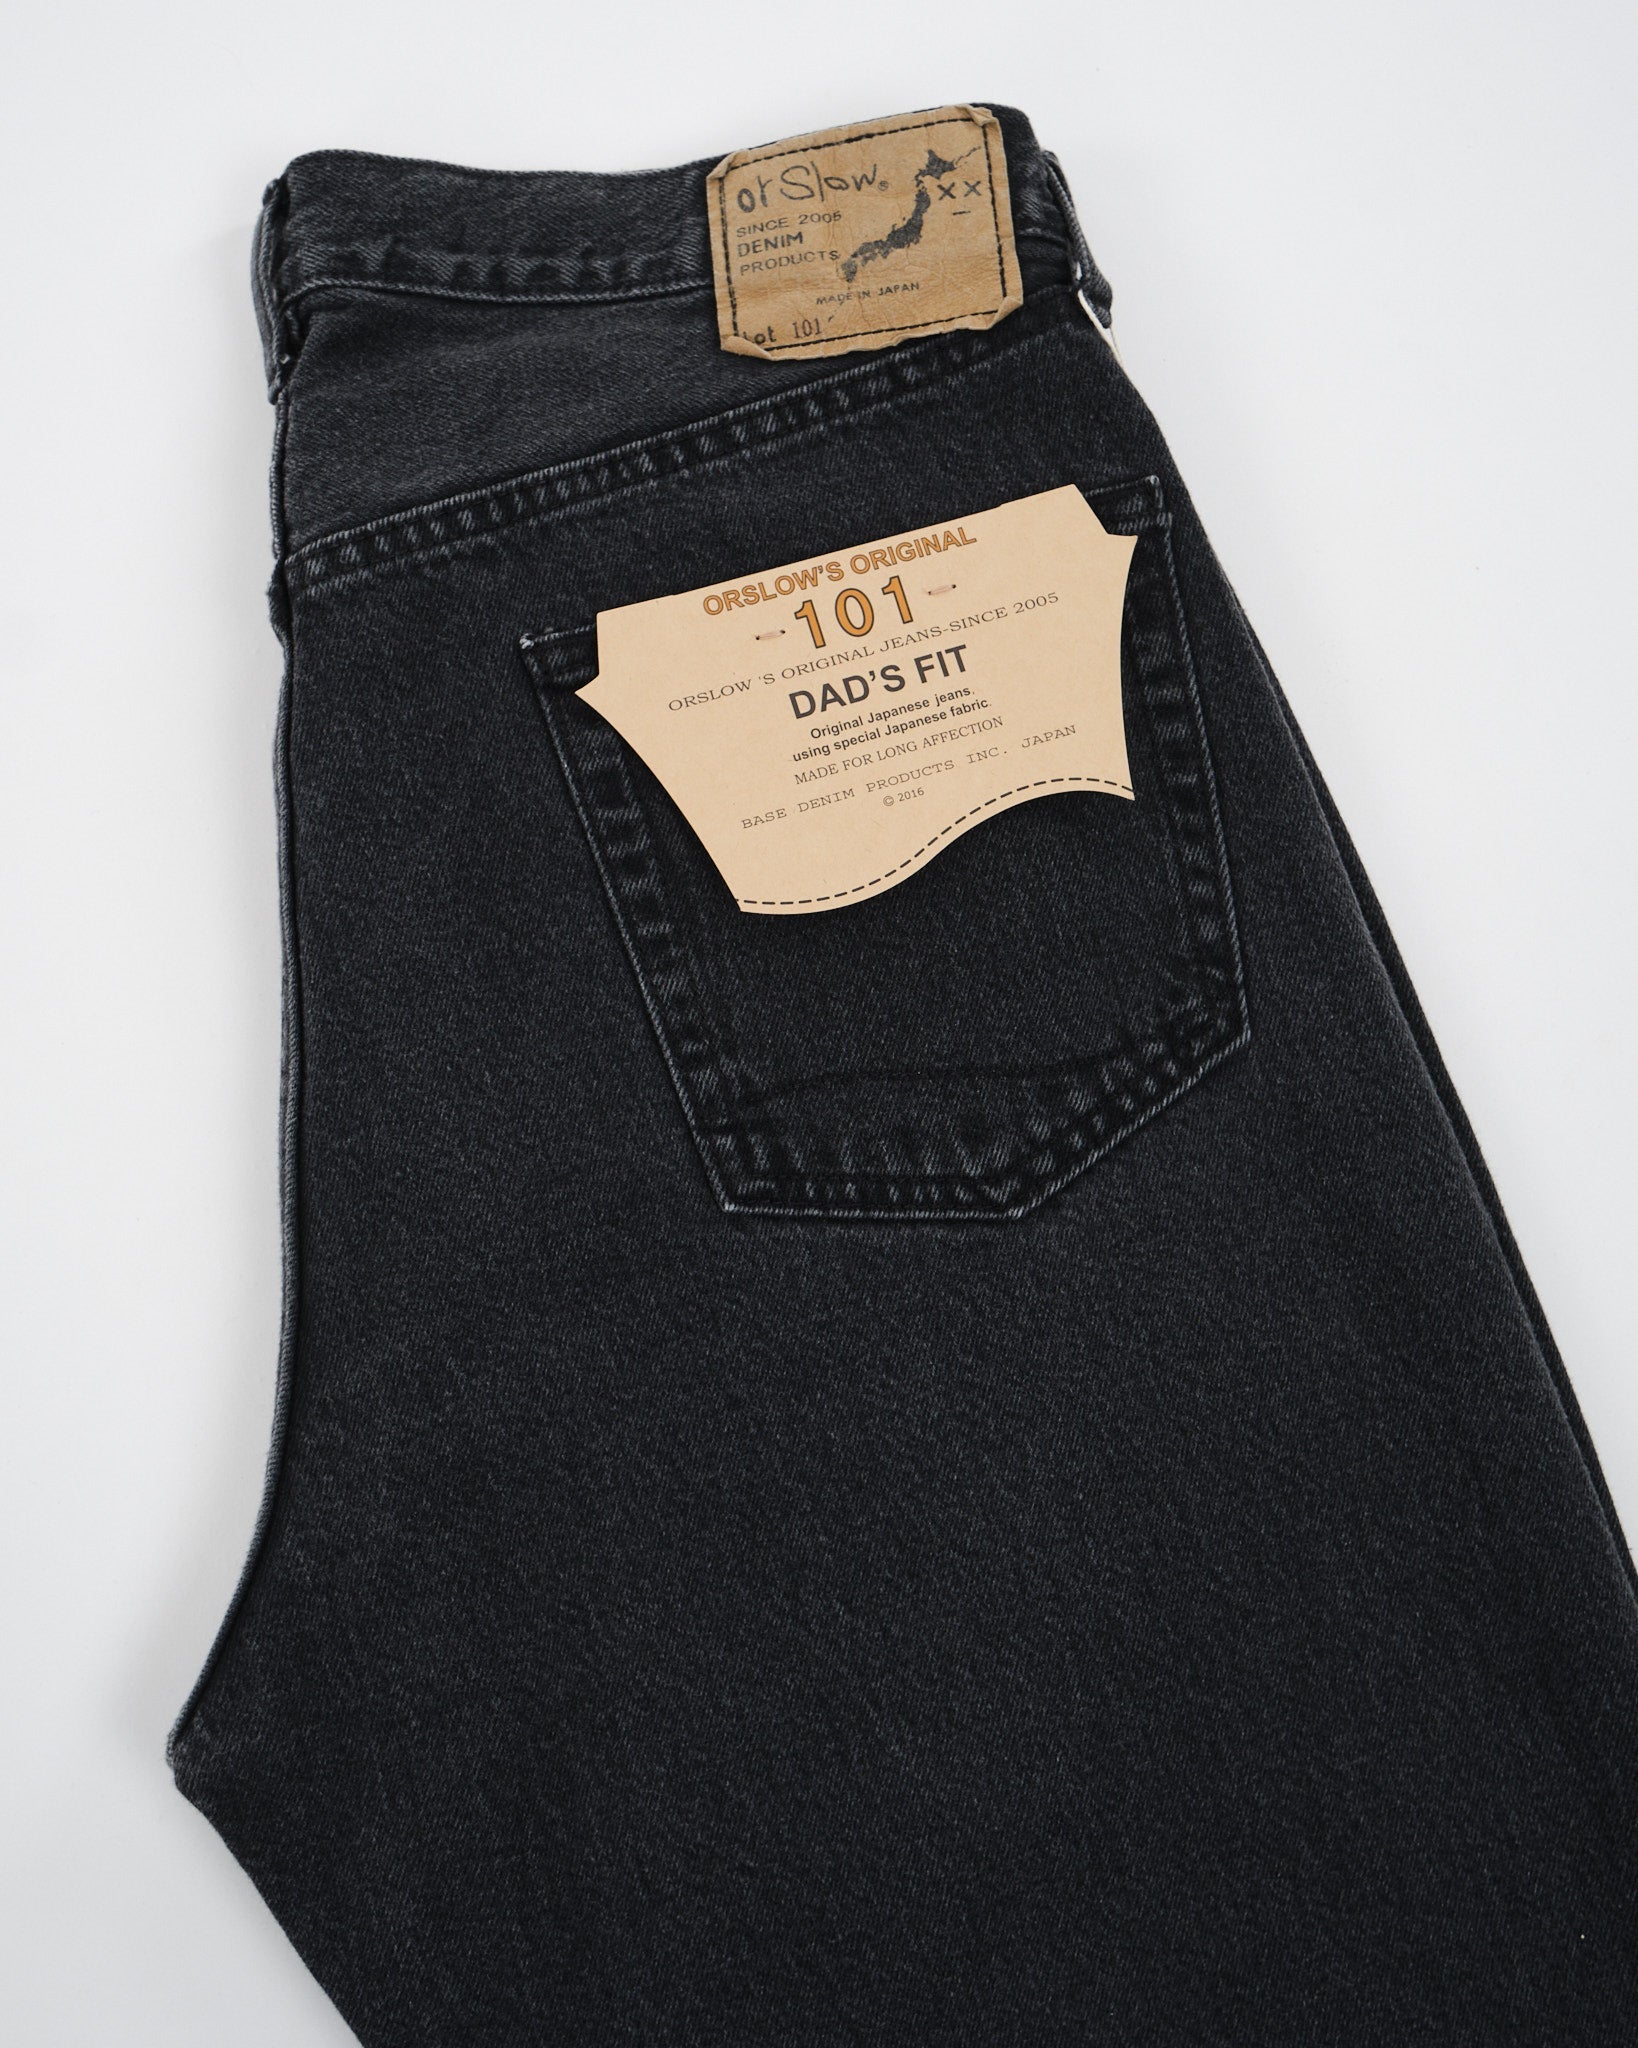 Buy Dark Blue Denim Jeans for Boys – Mumkins